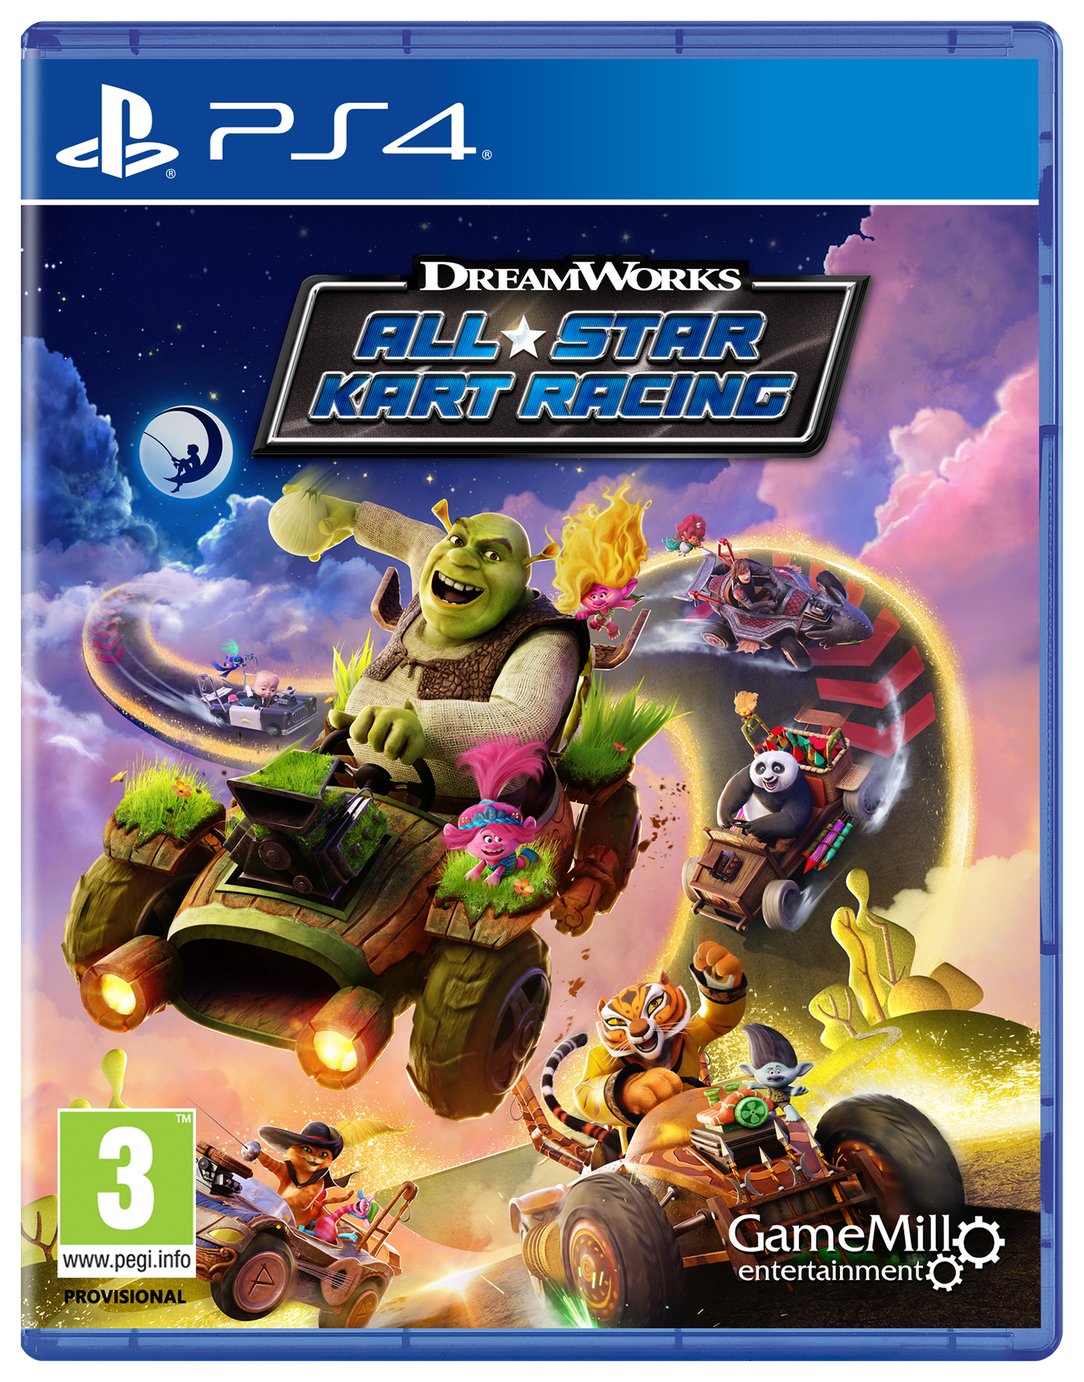 DreamWorks All-Star Kart Racing PS4 Game